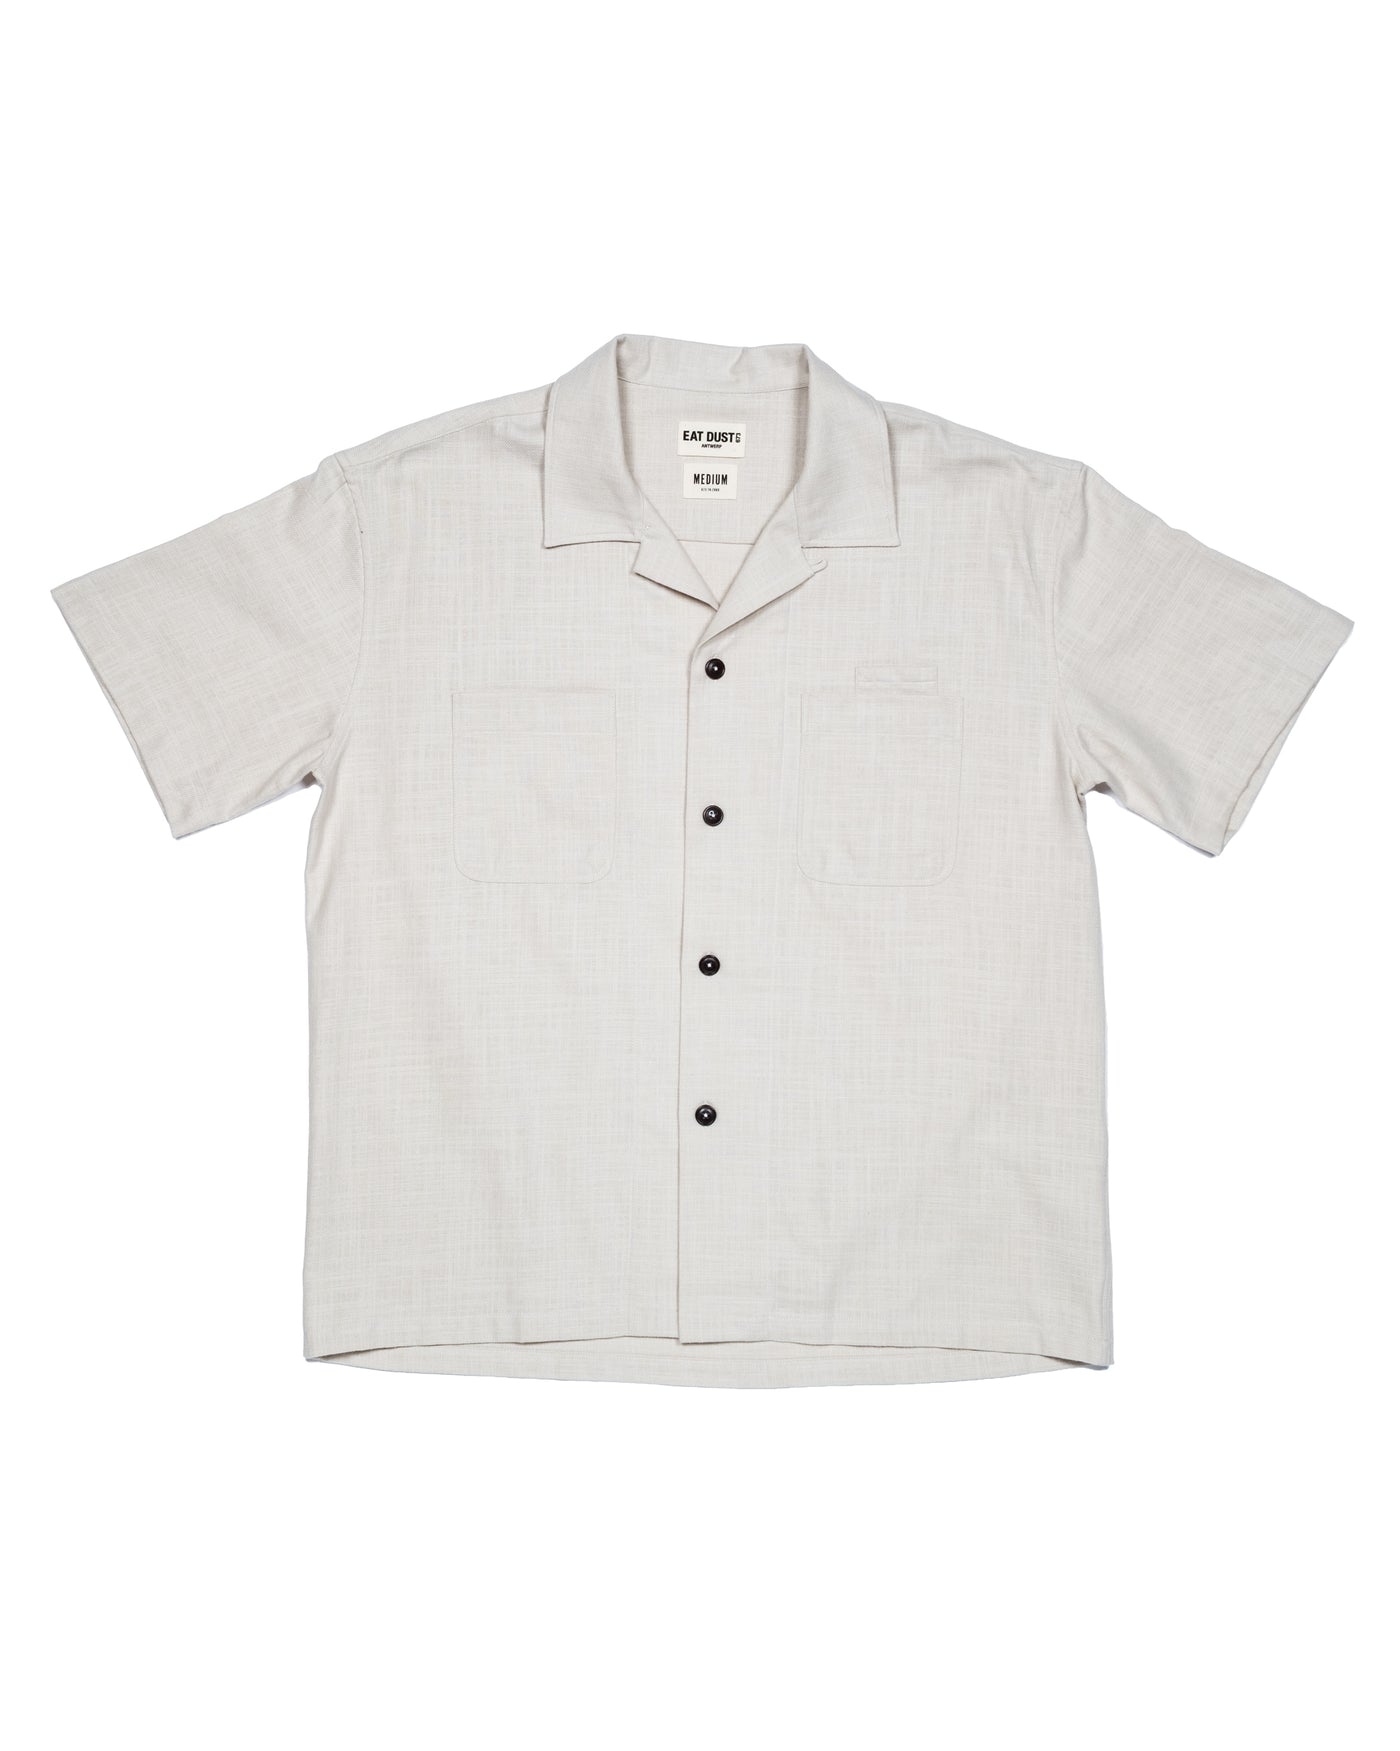 Aloha Shirt Slub Cotton Off White